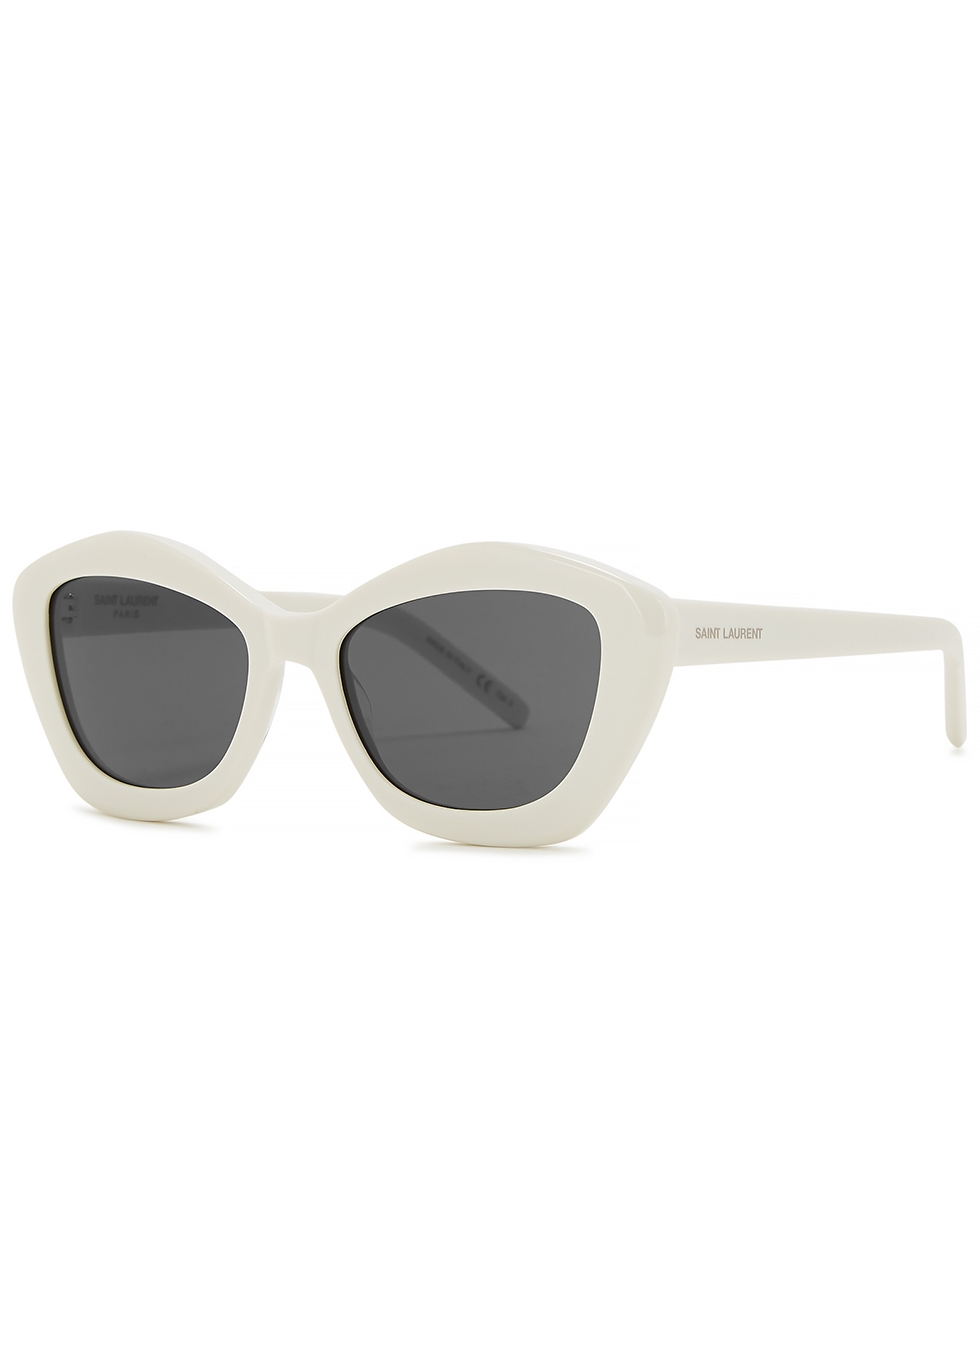 Saint Laurent SL68 white cat-eye sunglasses - Harvey Nichols